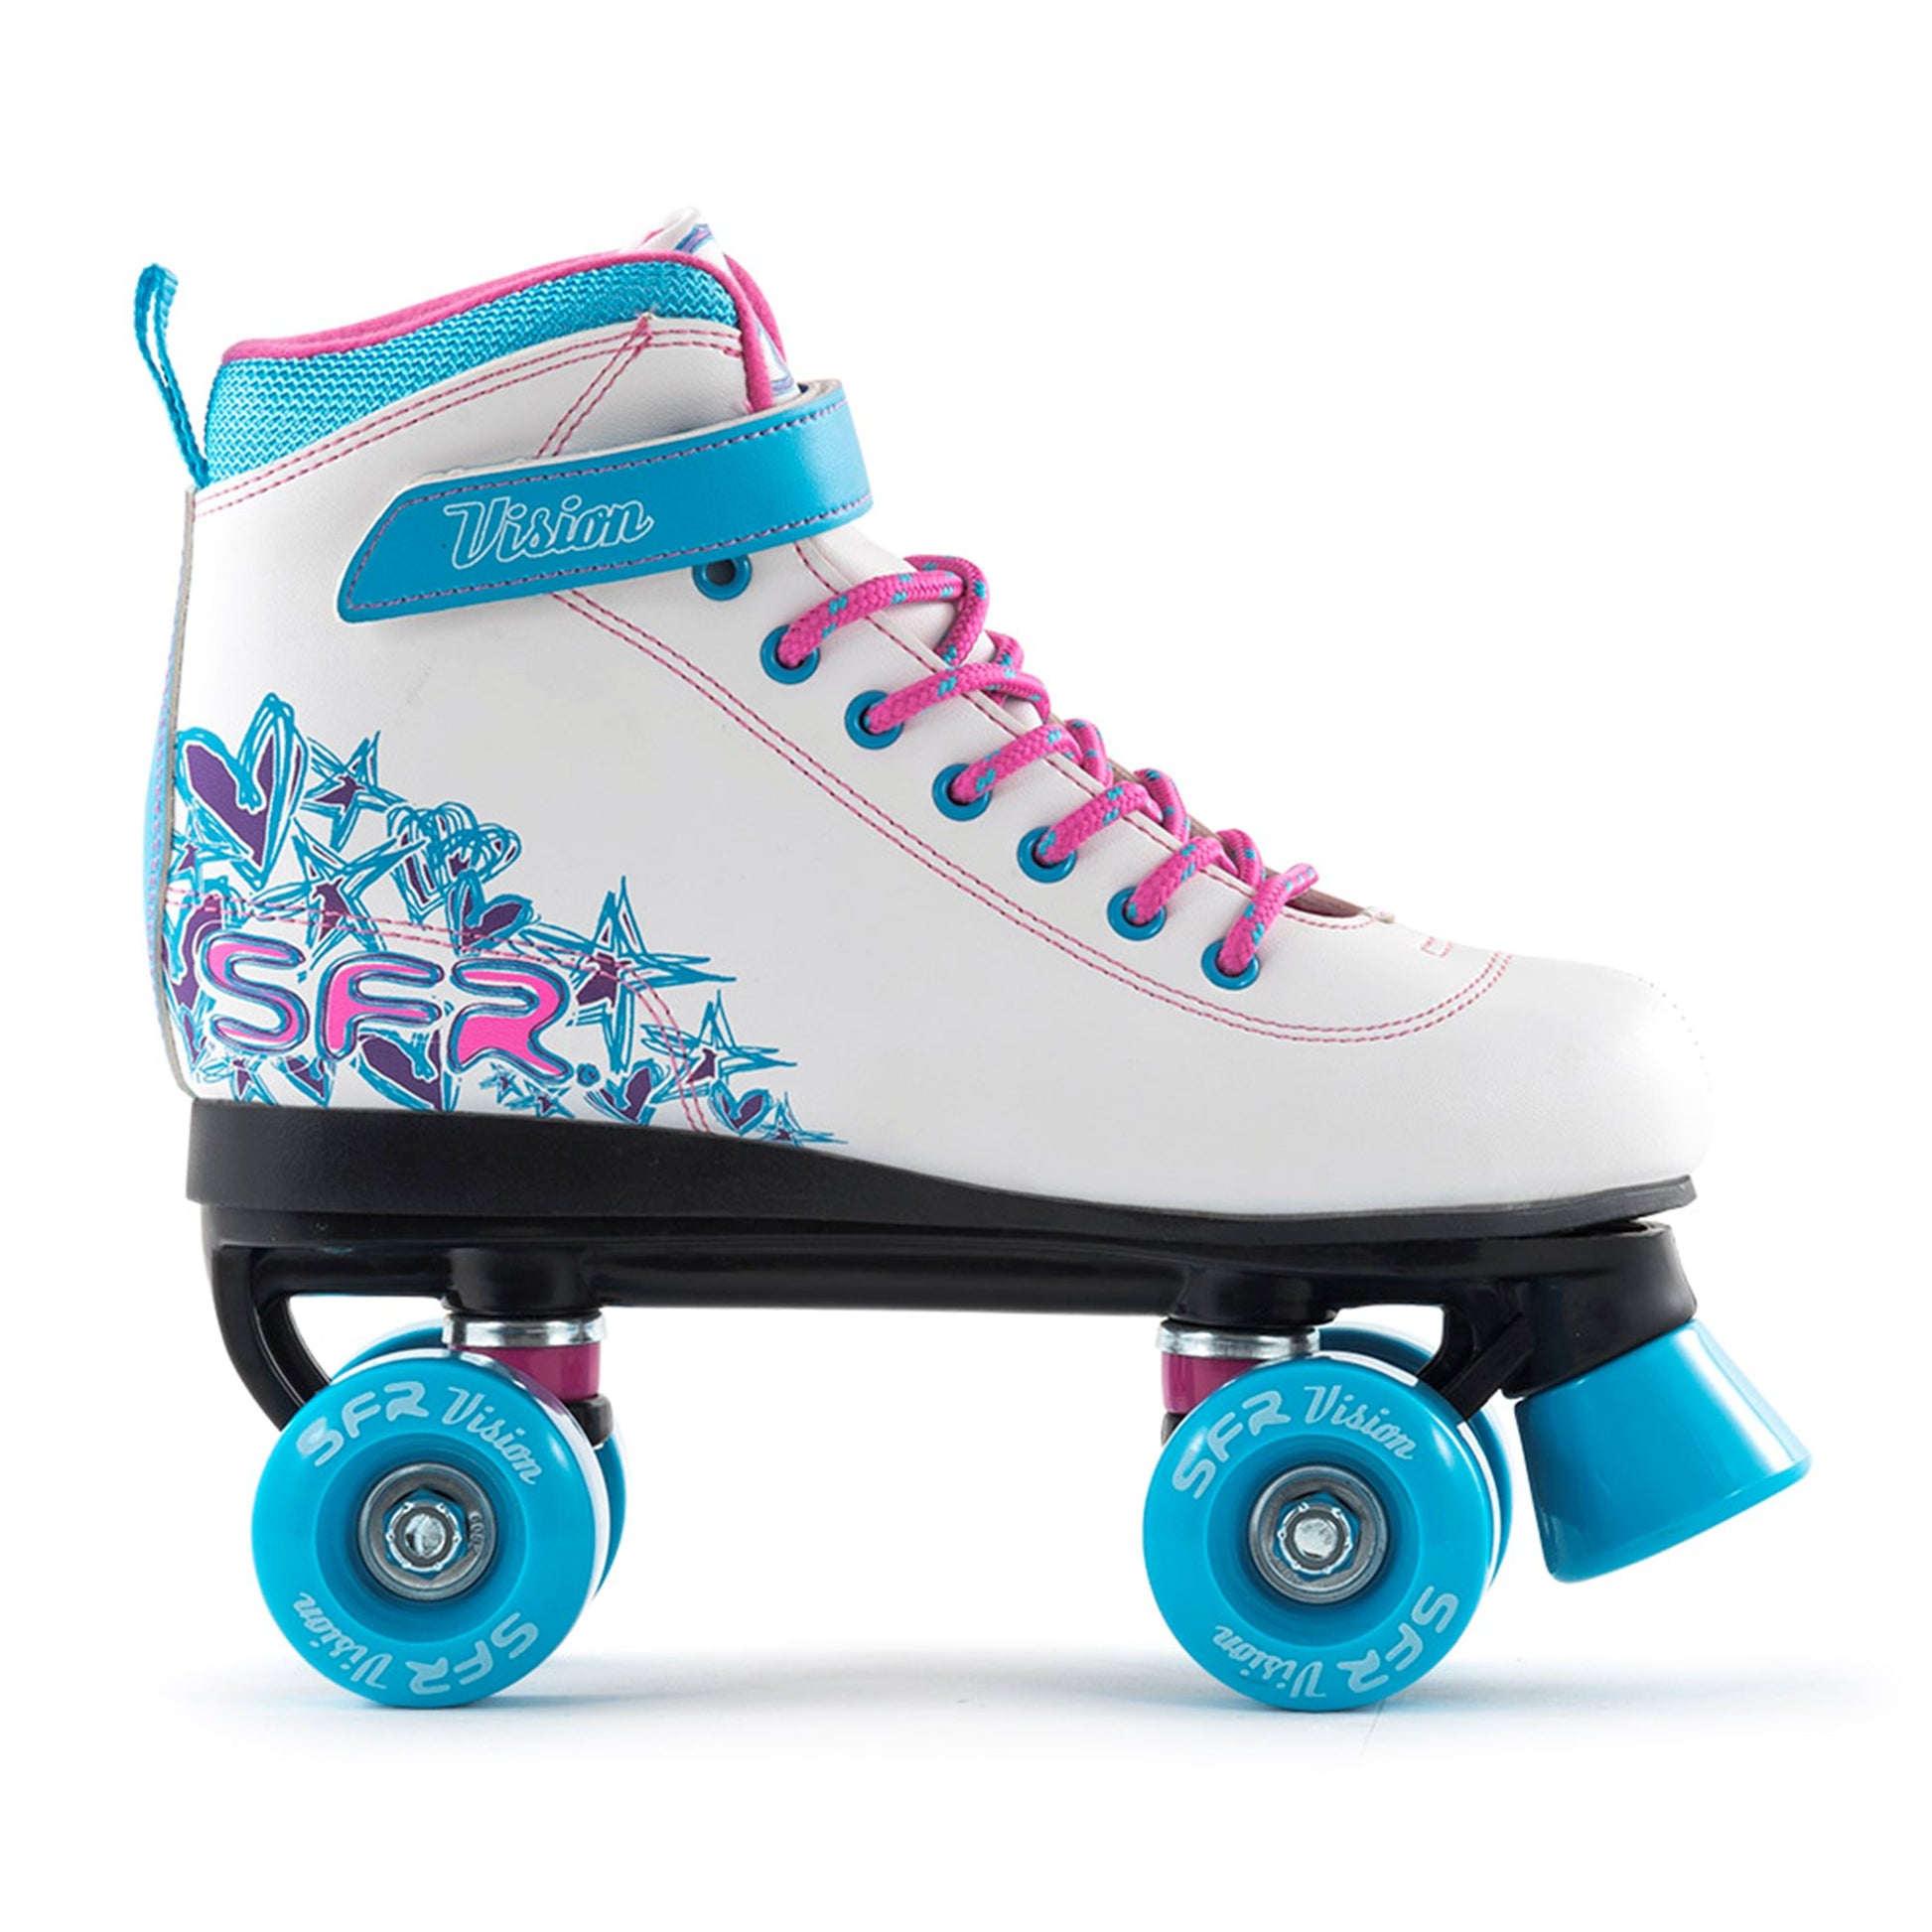 SFR Vision II Quad Roller Skates - White / Blue - Right